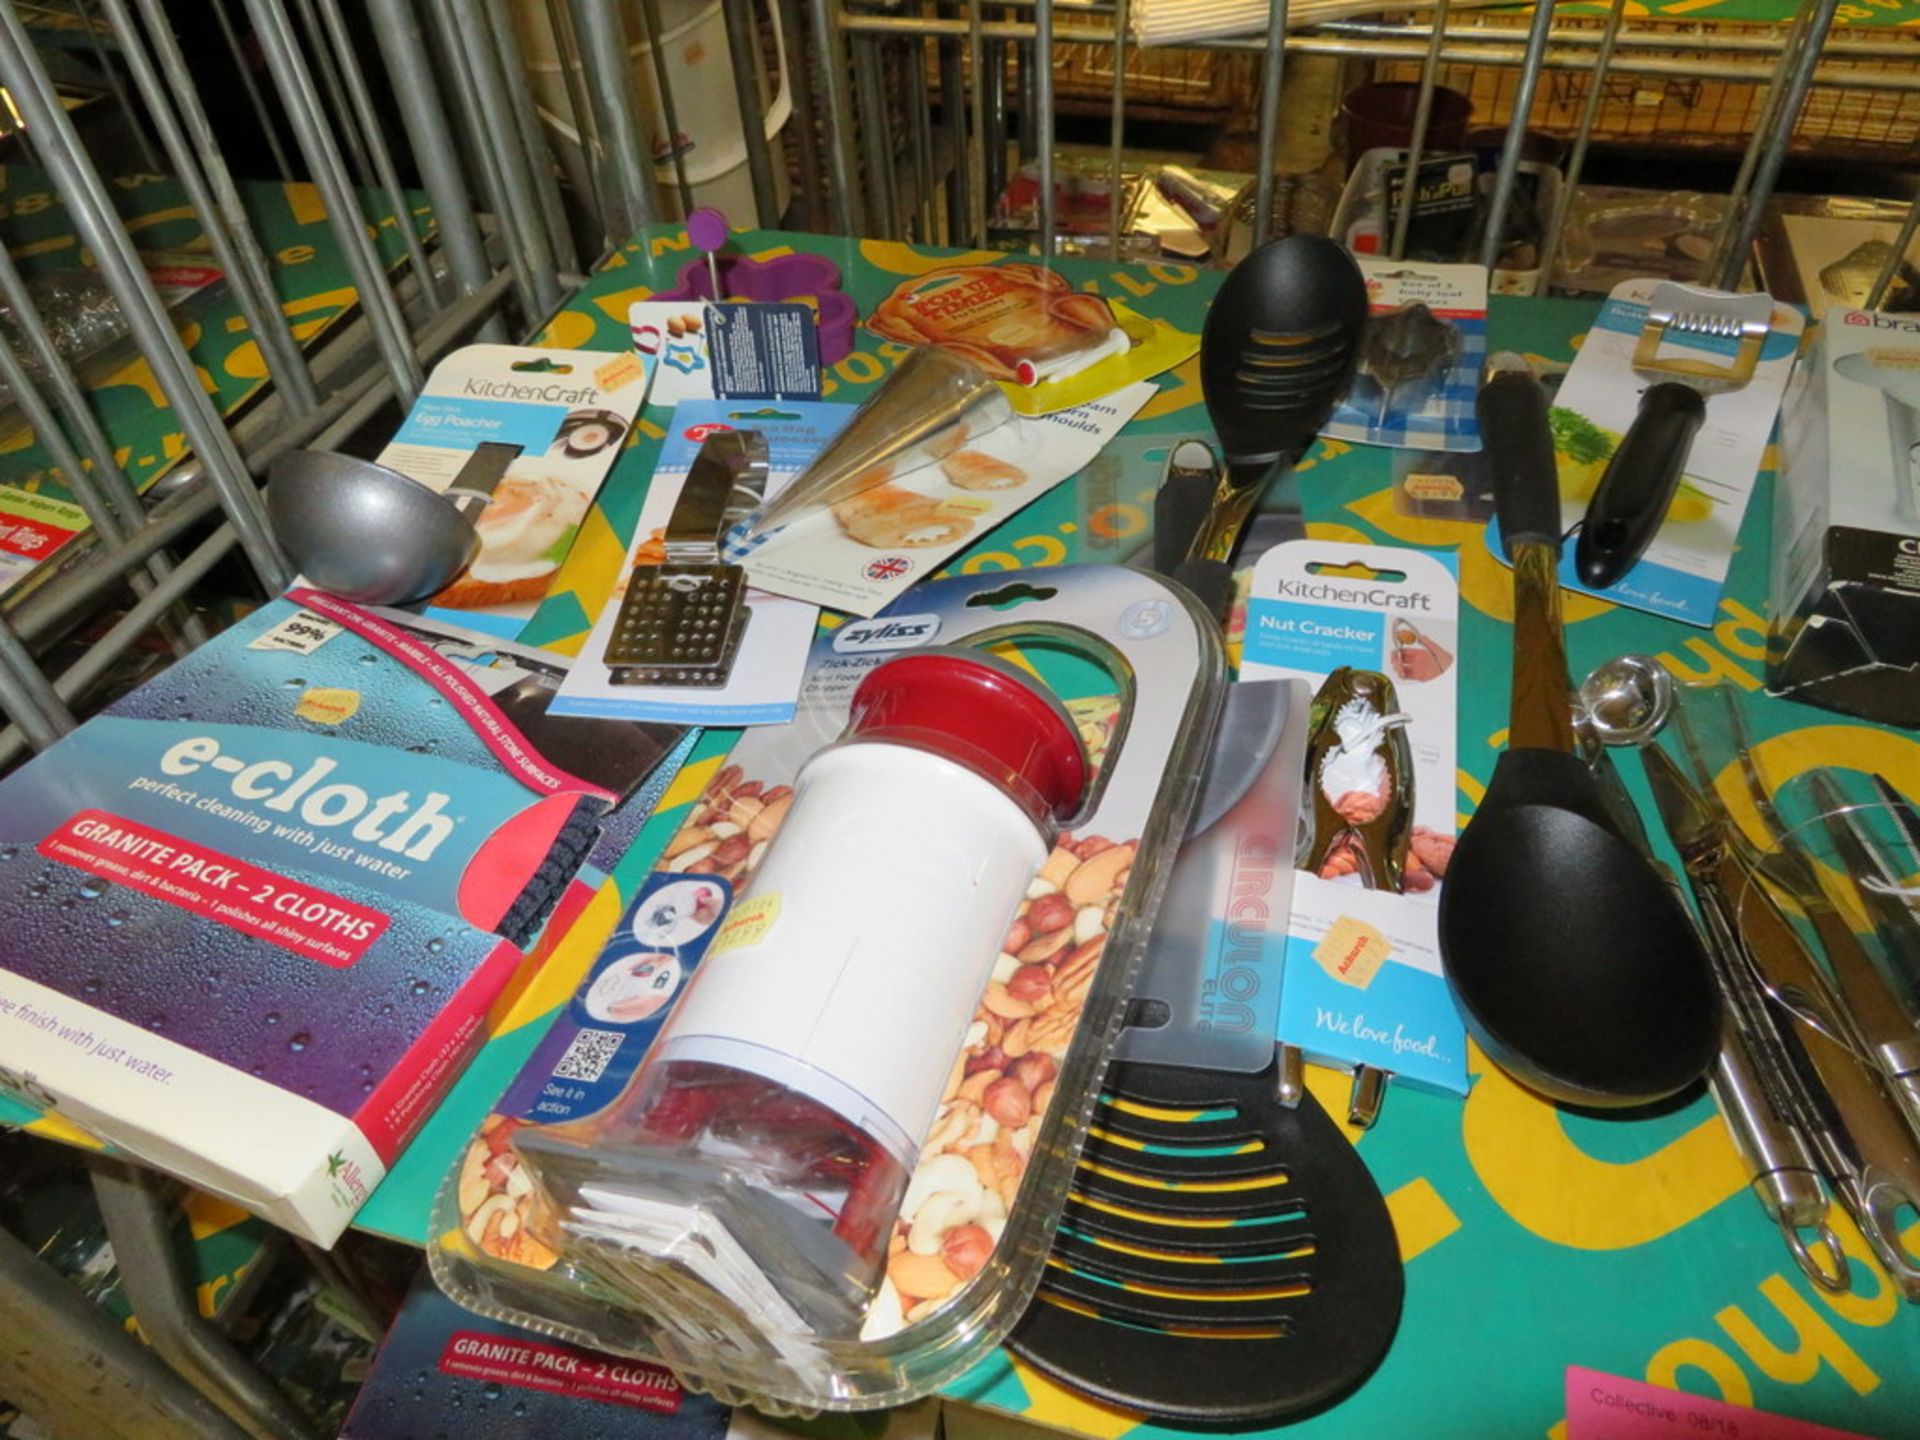 Kitchen utensils - chopper, egg poacher, e-cloths, melon baller - Image 3 of 3